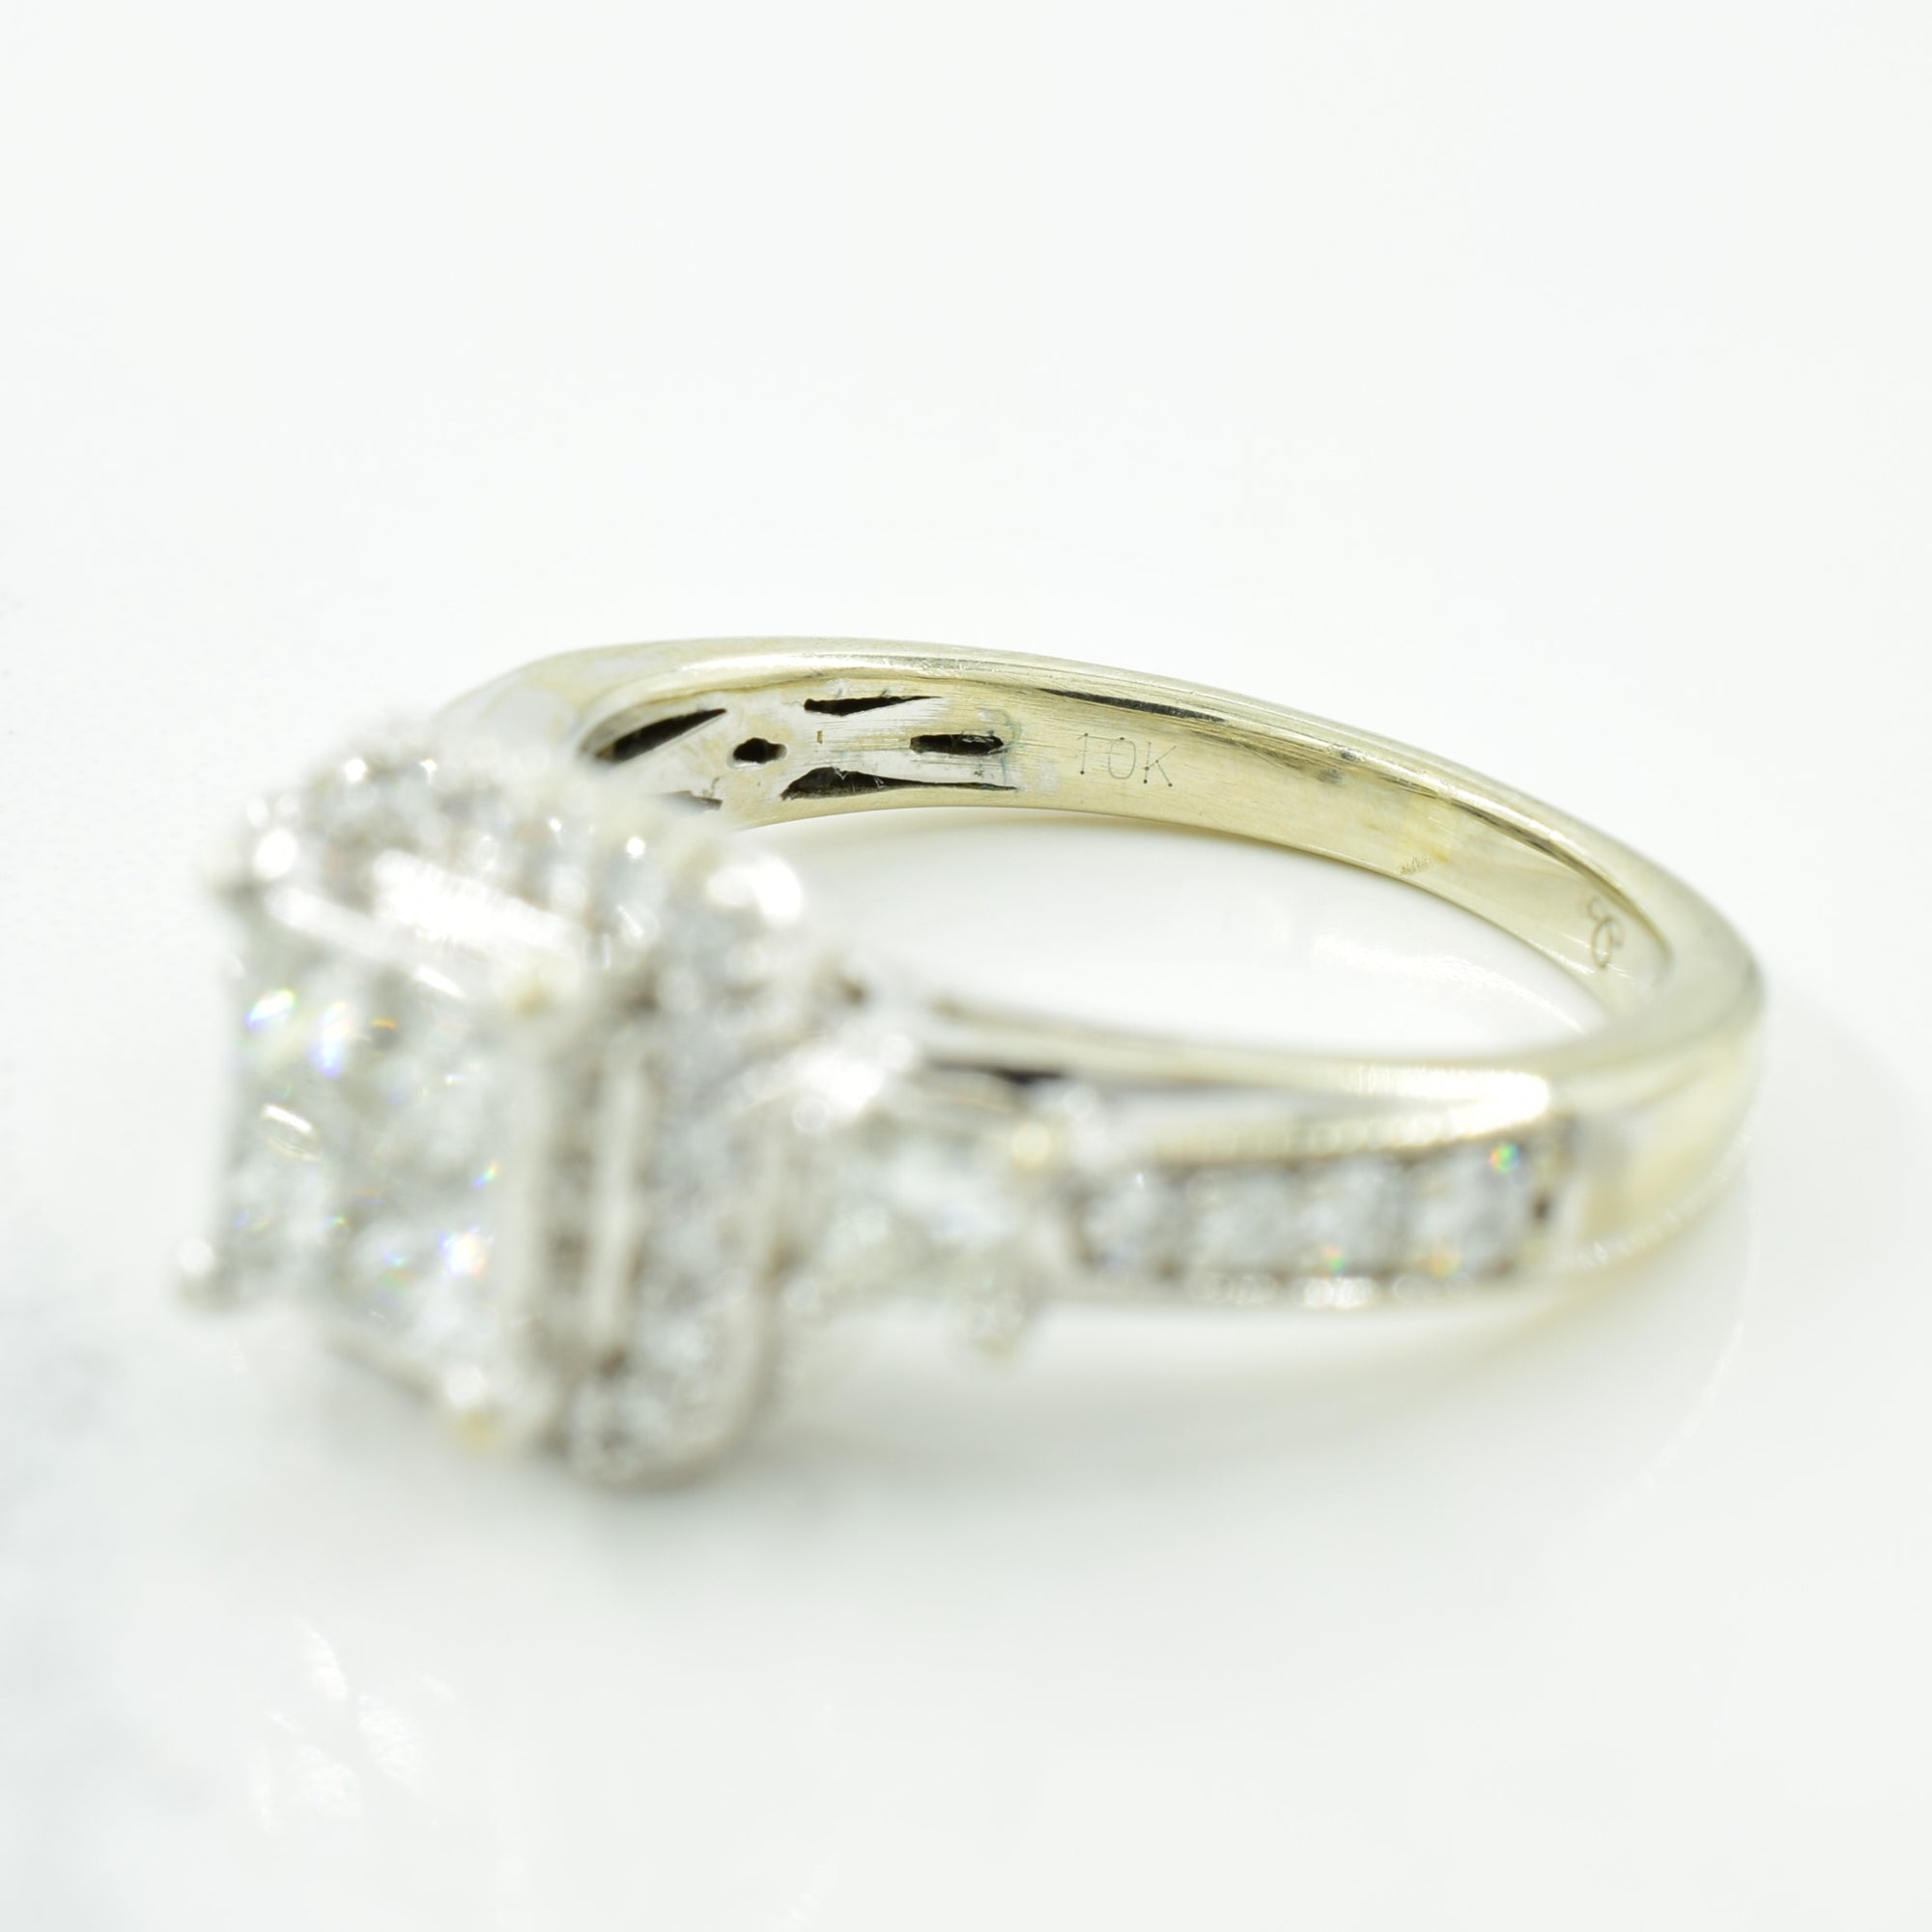 Diamond Engagement Ring | 0.82ctw | SZ 5.25 |